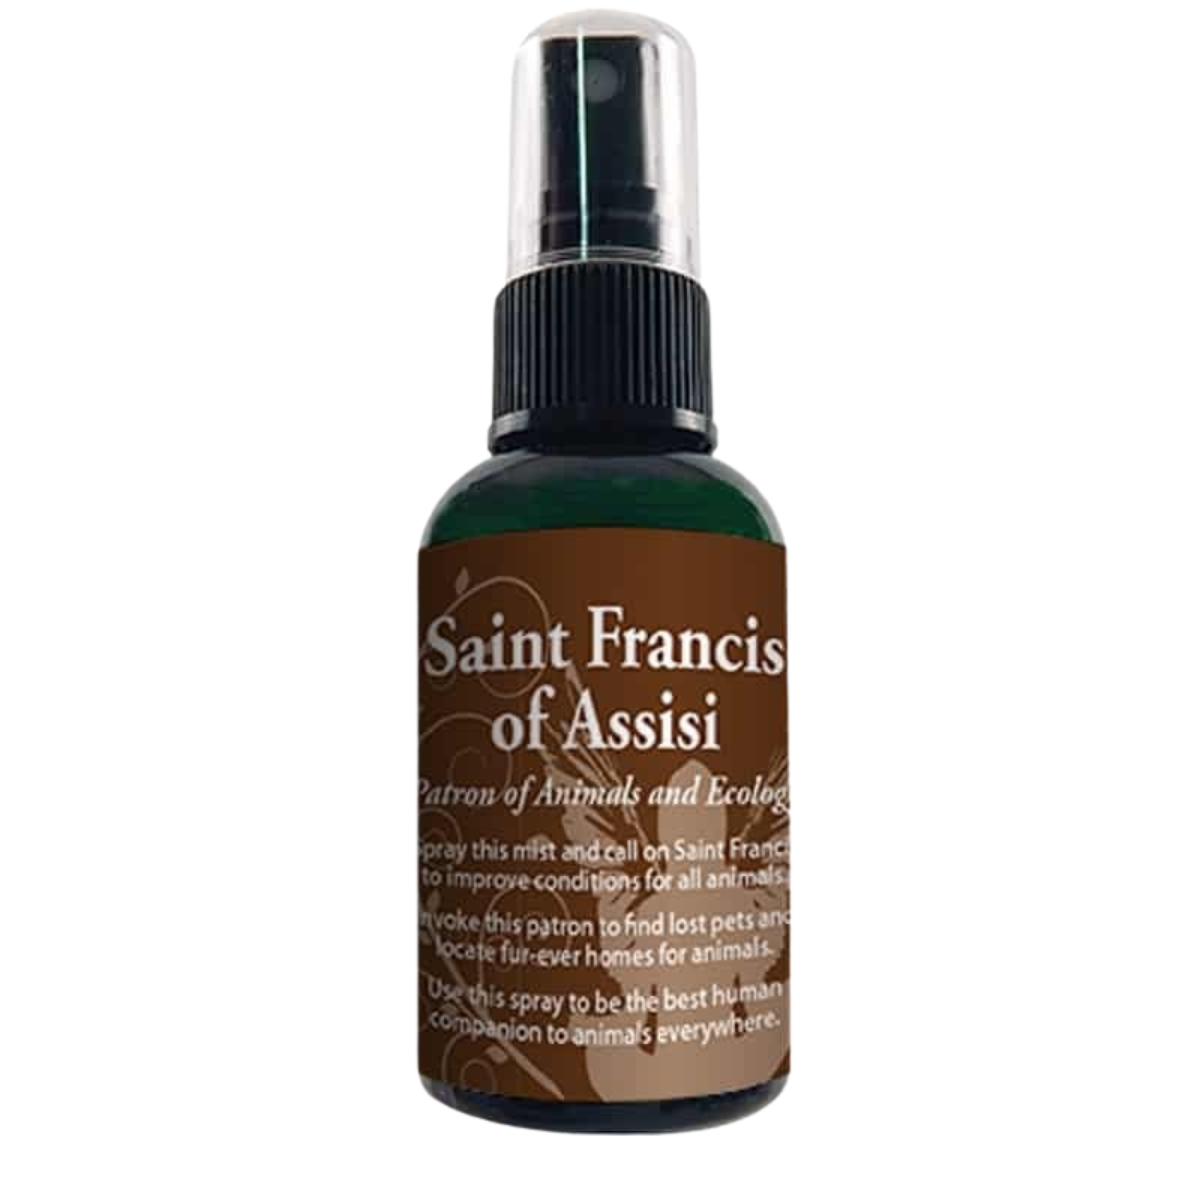 Saint Francis of Assisi Spray